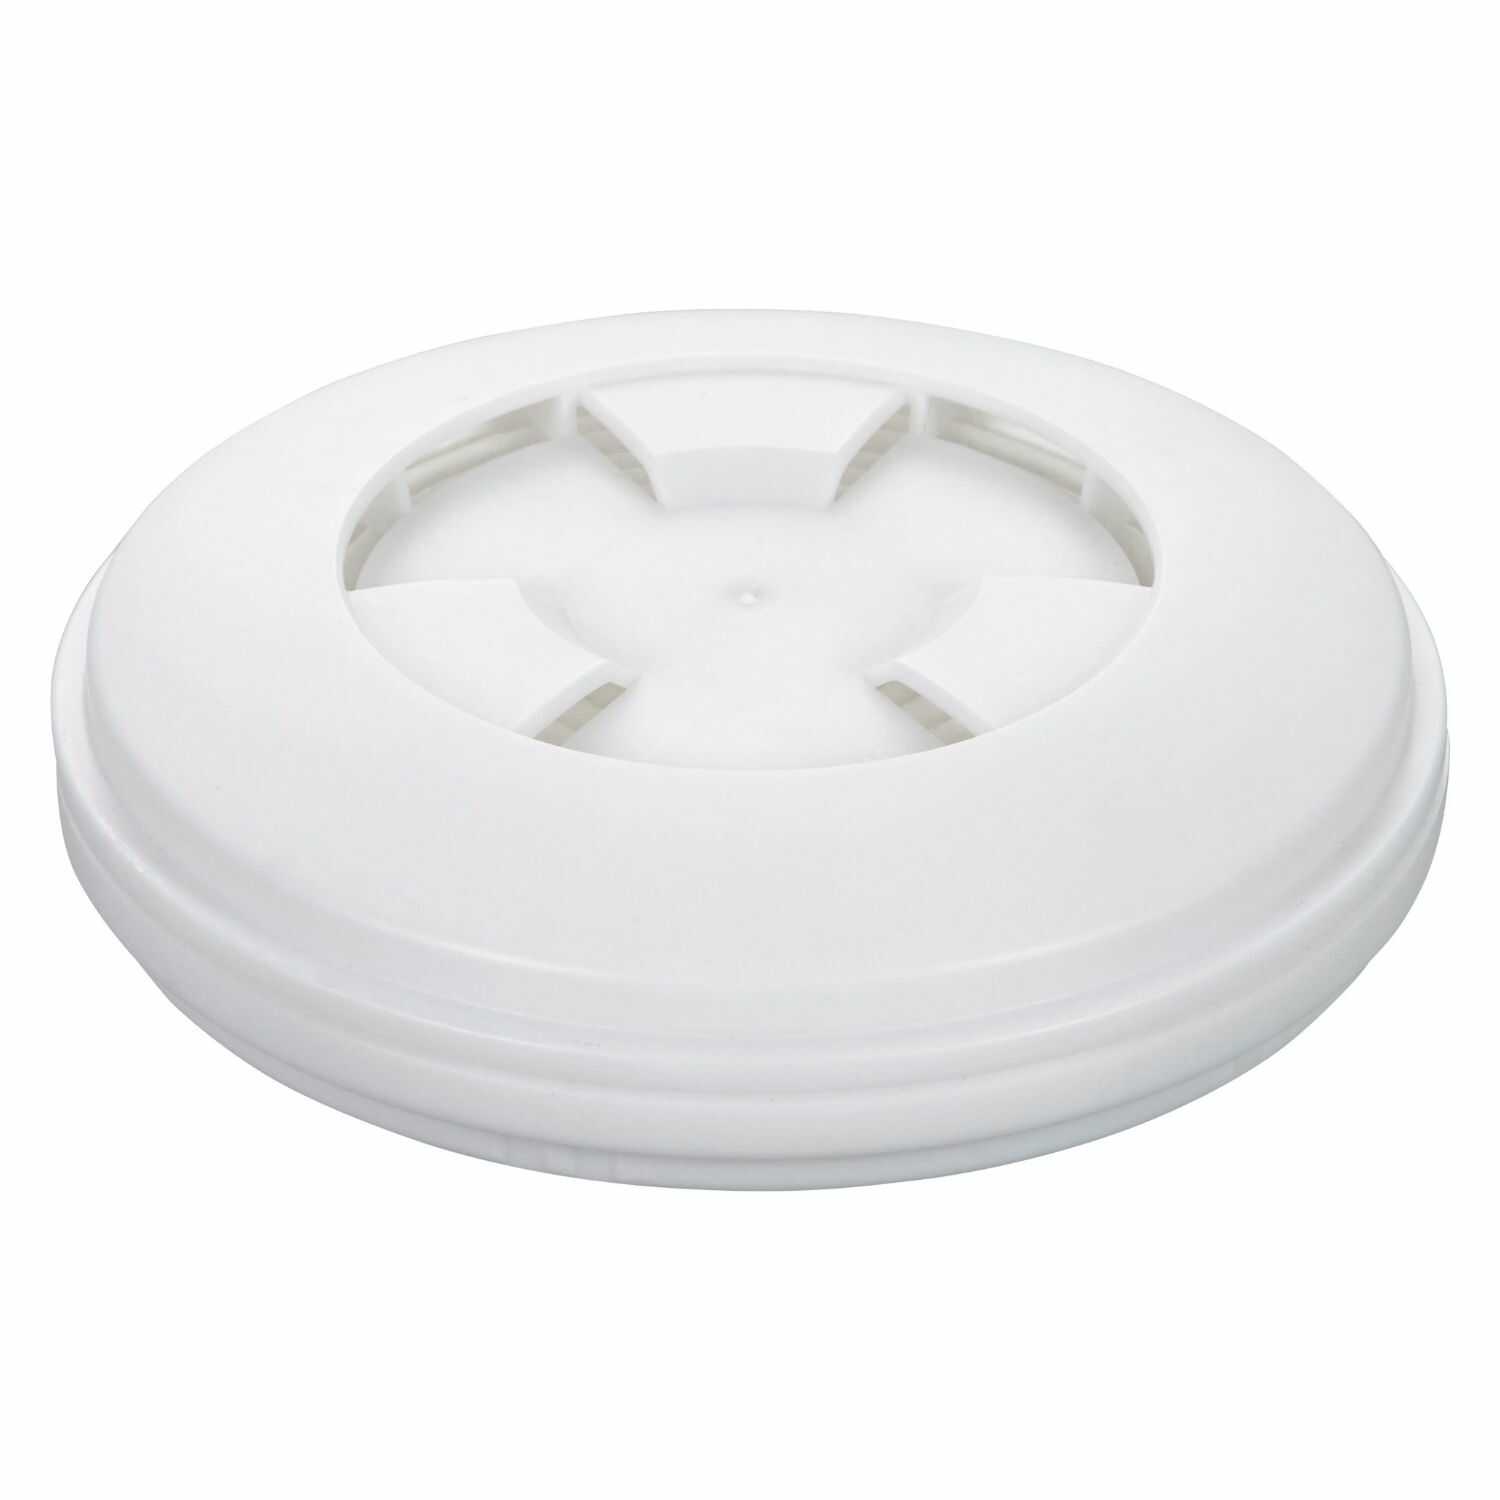 SHIGEMATSU X3 Particulate Filter Cartridge , White, TW Series, 11082 (Pack of 1)